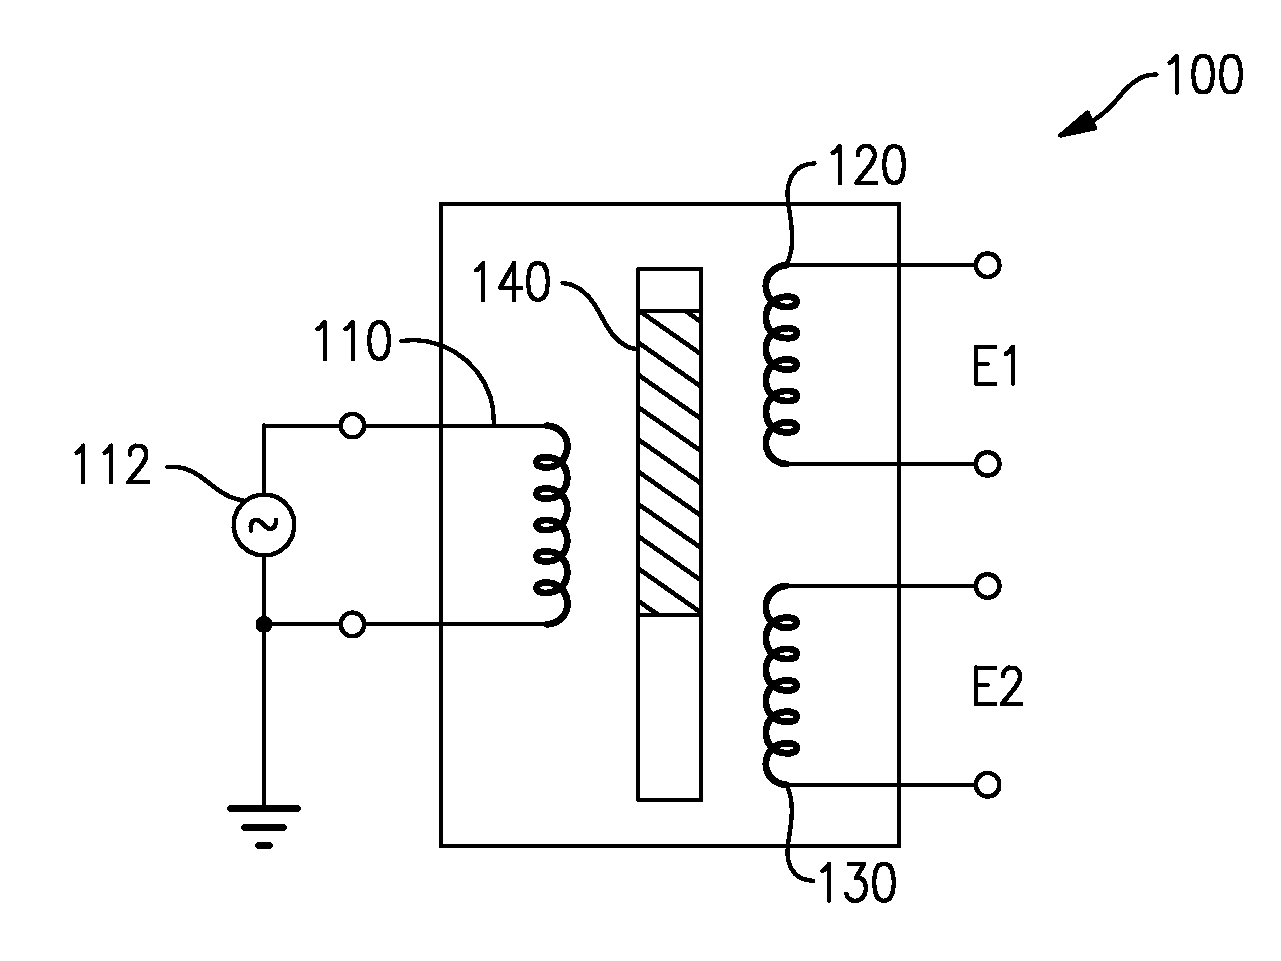 Transformer based sensor arrangement